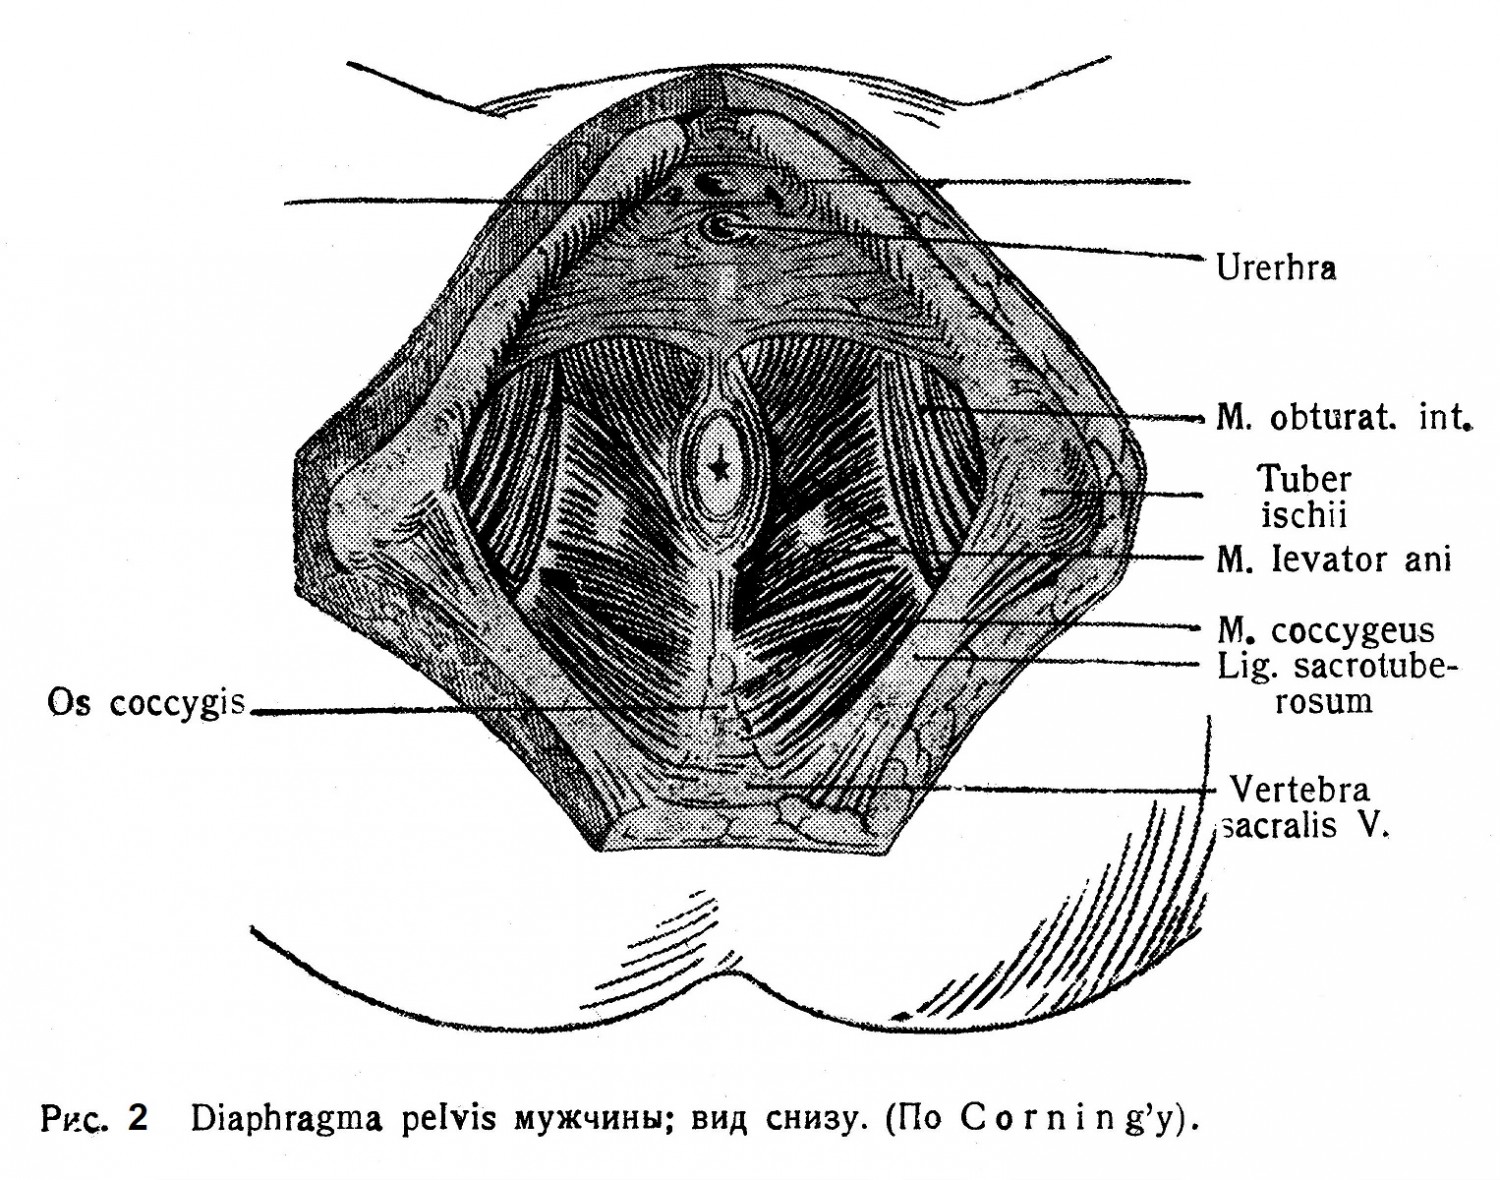 Diaphragma pelvis мужчины; вид снизу. (По Corning’y).